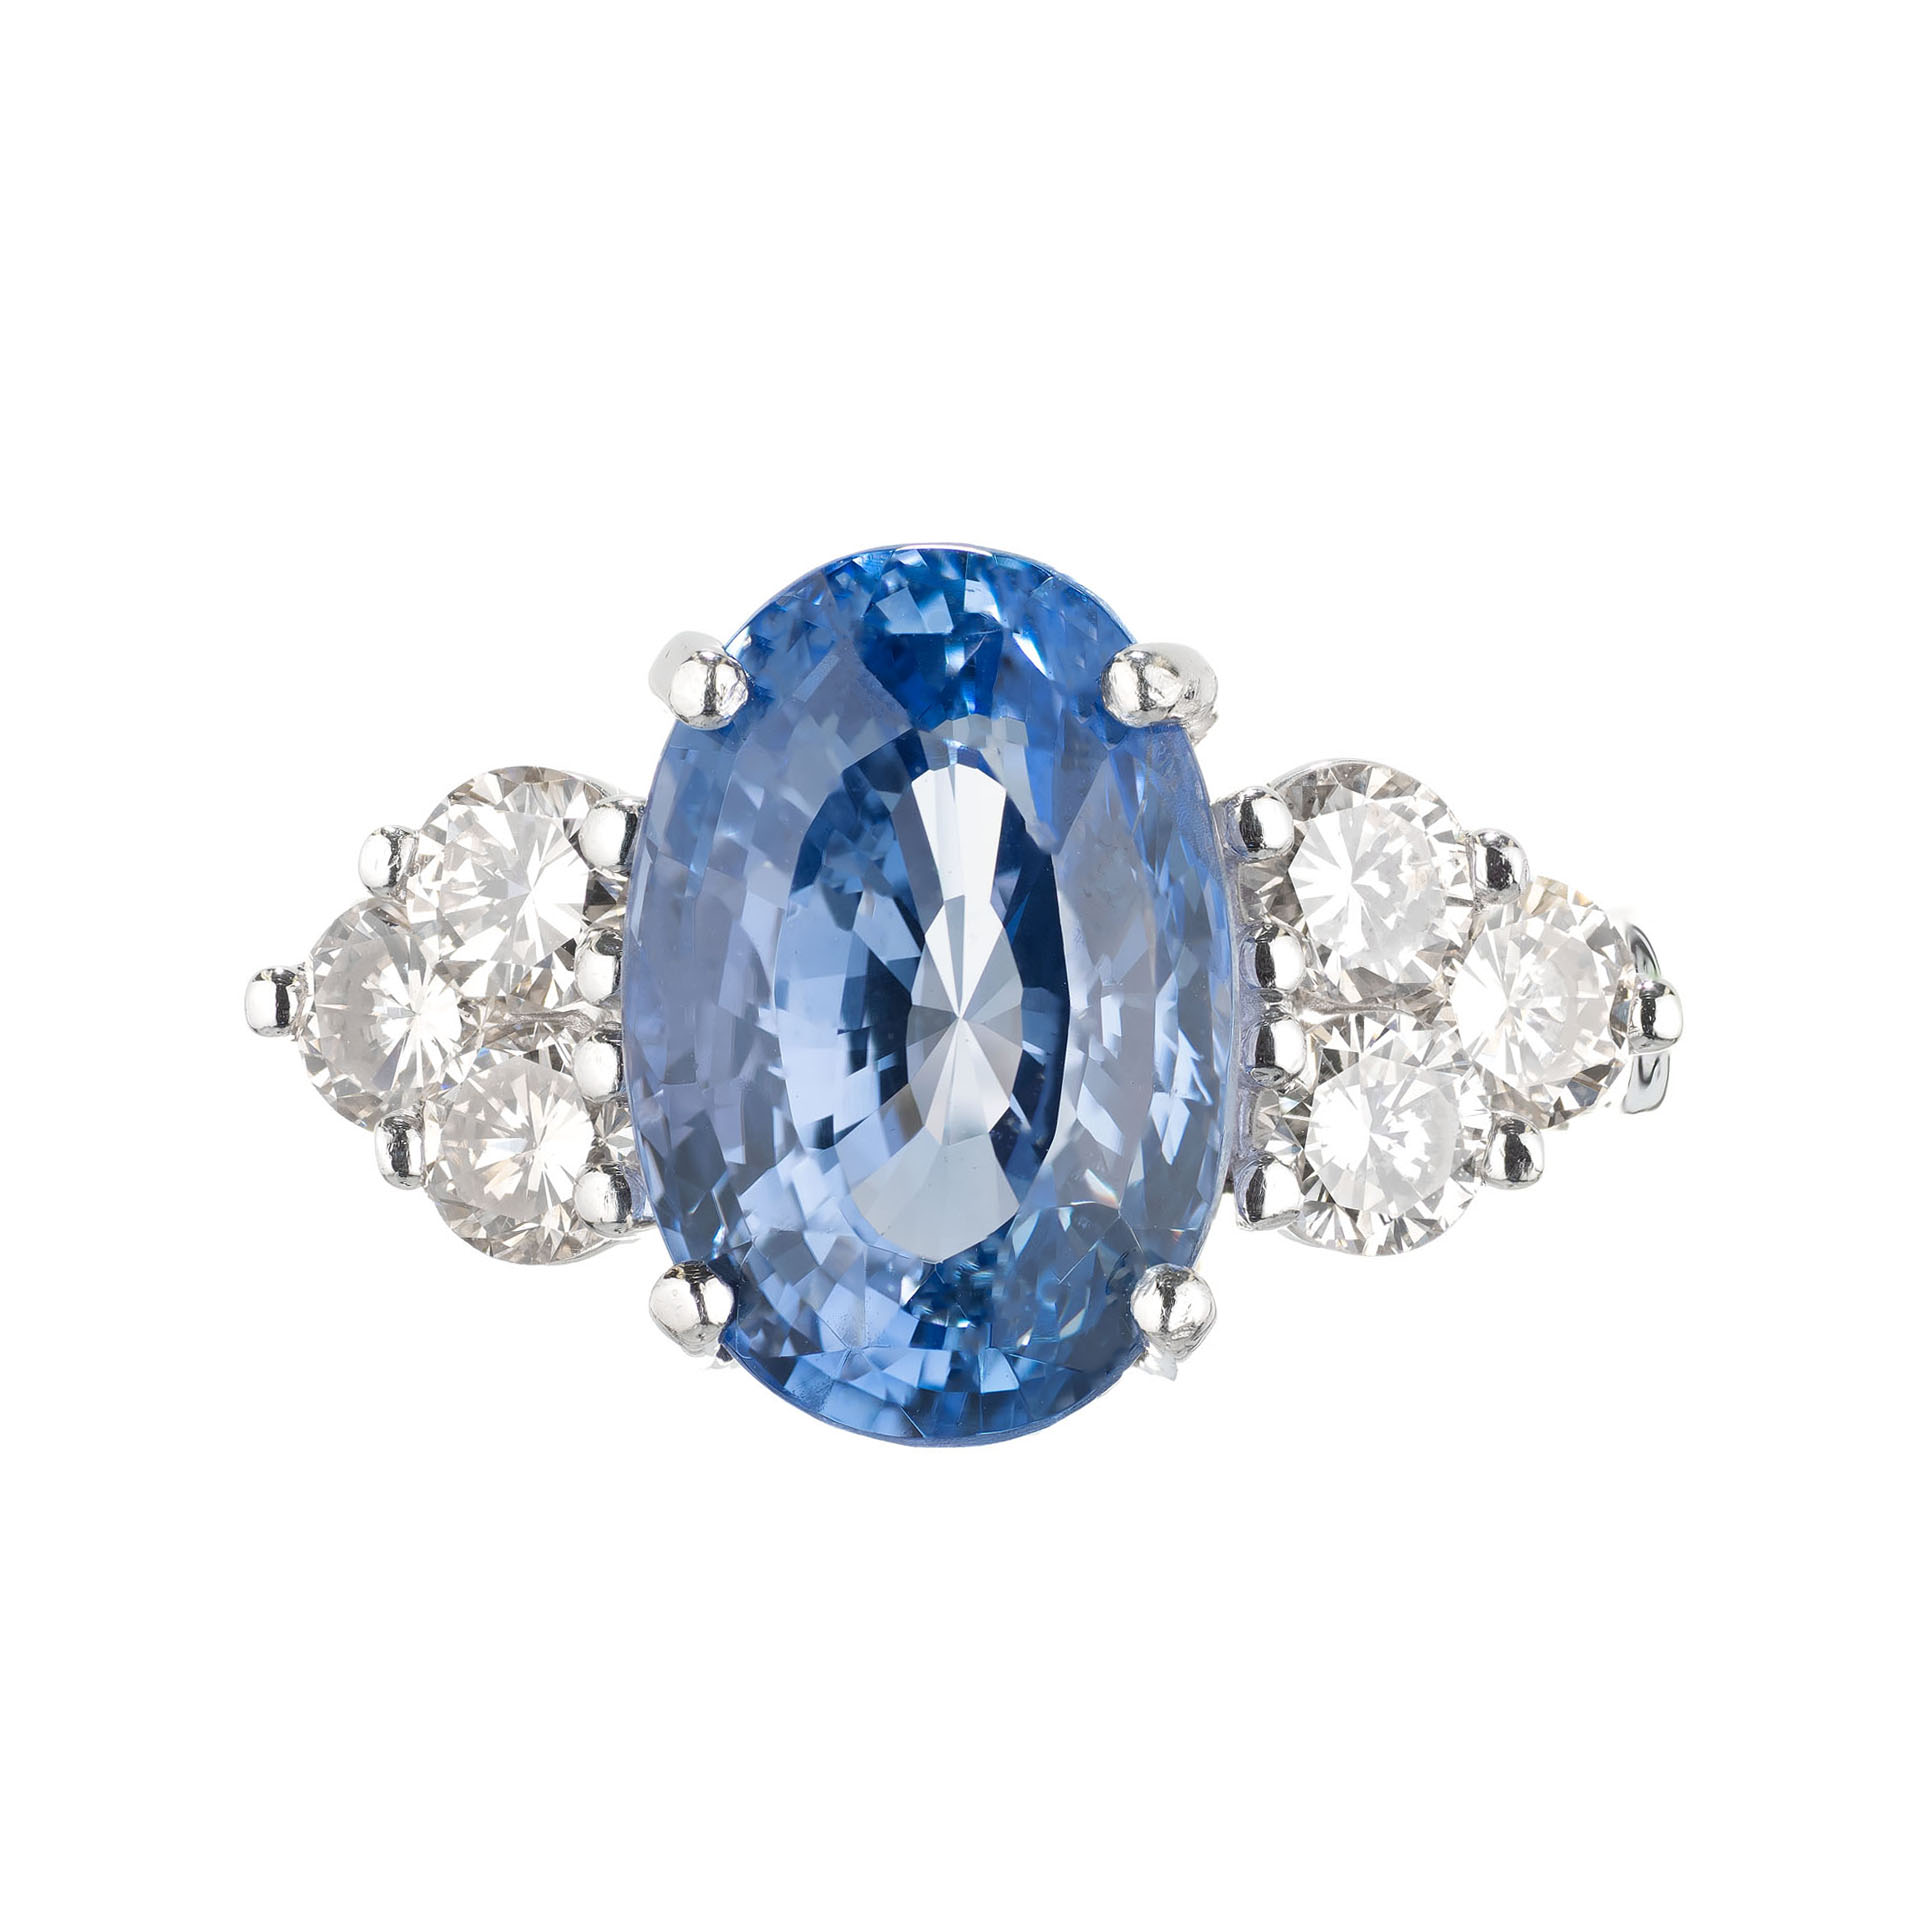 Natural Periwinkle Blue Sapphire Diamond Platinum Ring | eBay